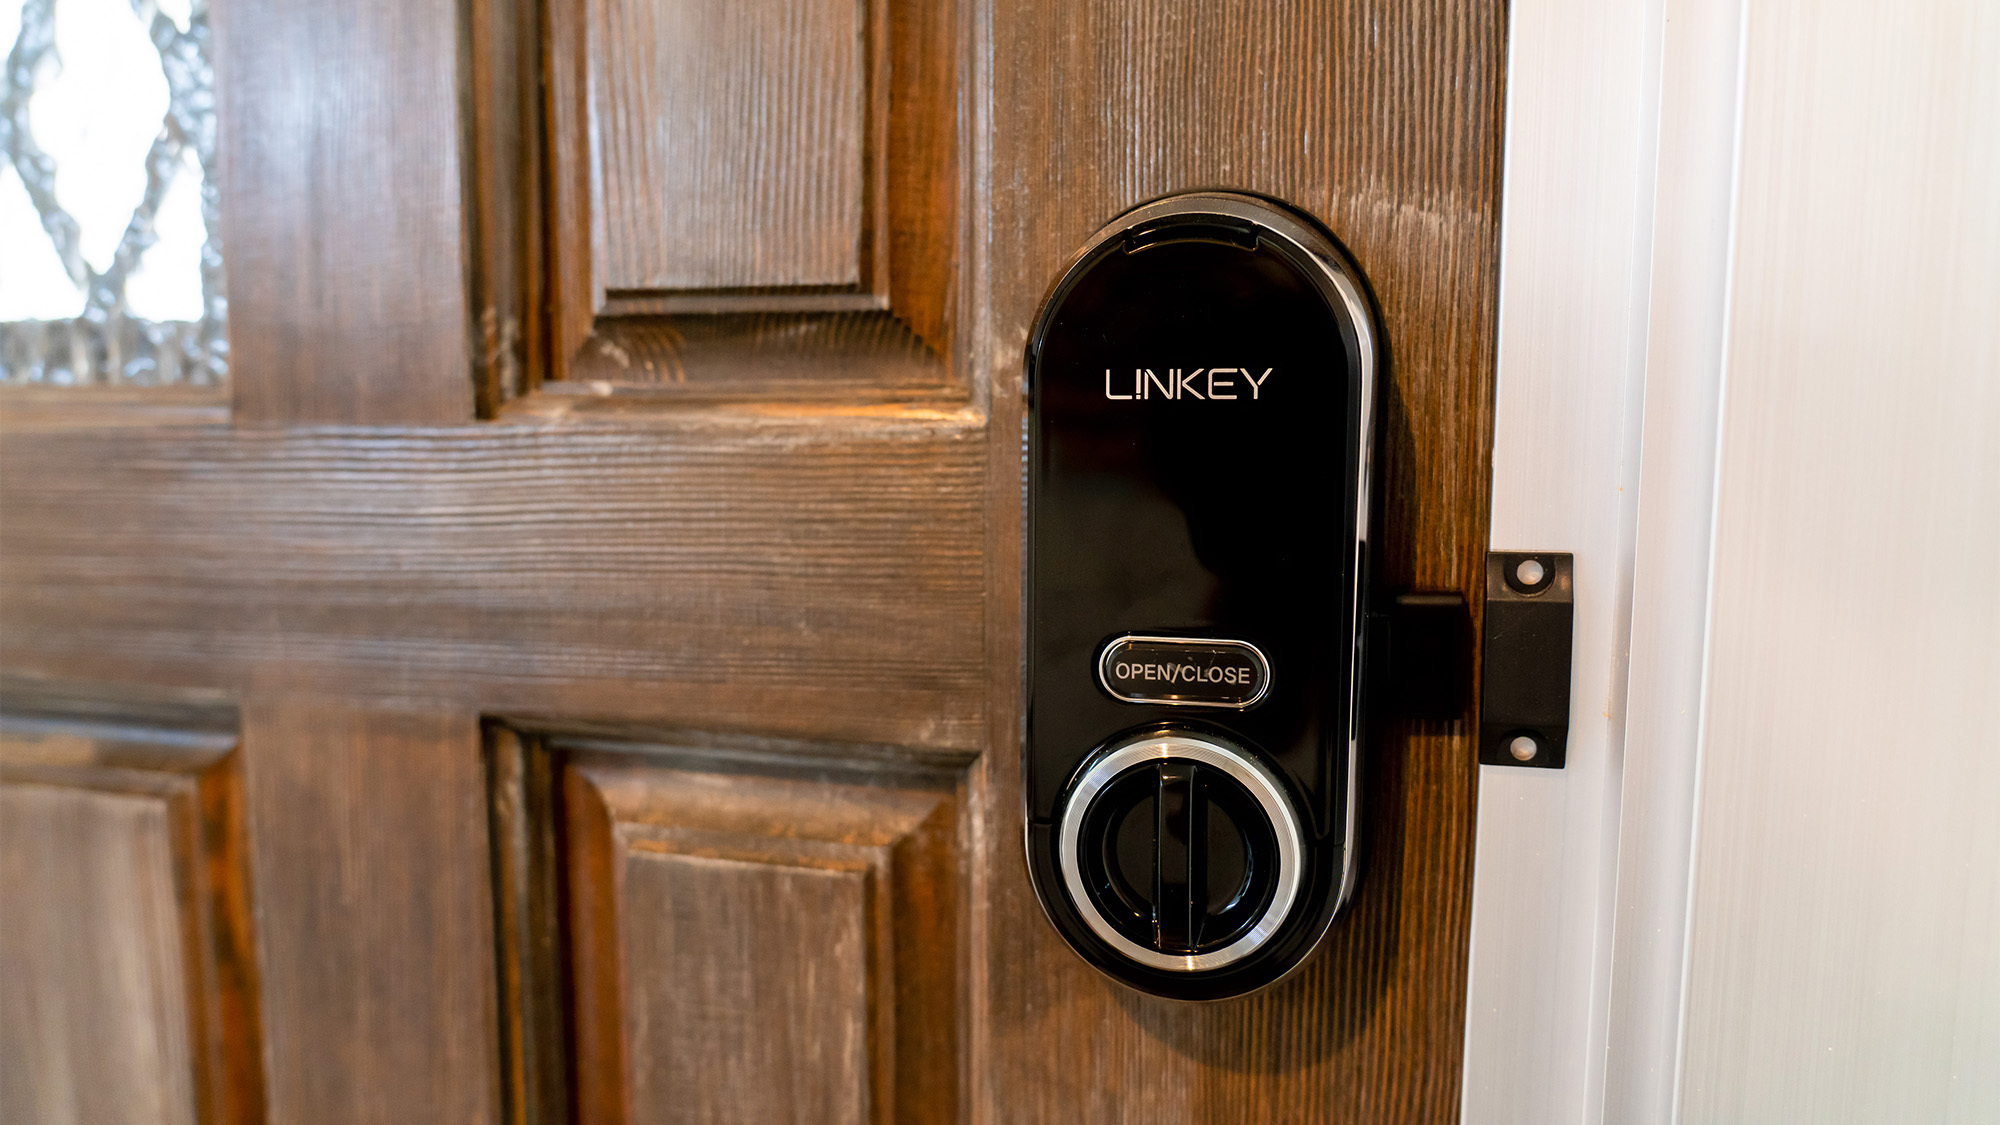 ・LINKEYの室内側内側からの解錠と施錠も楽々です